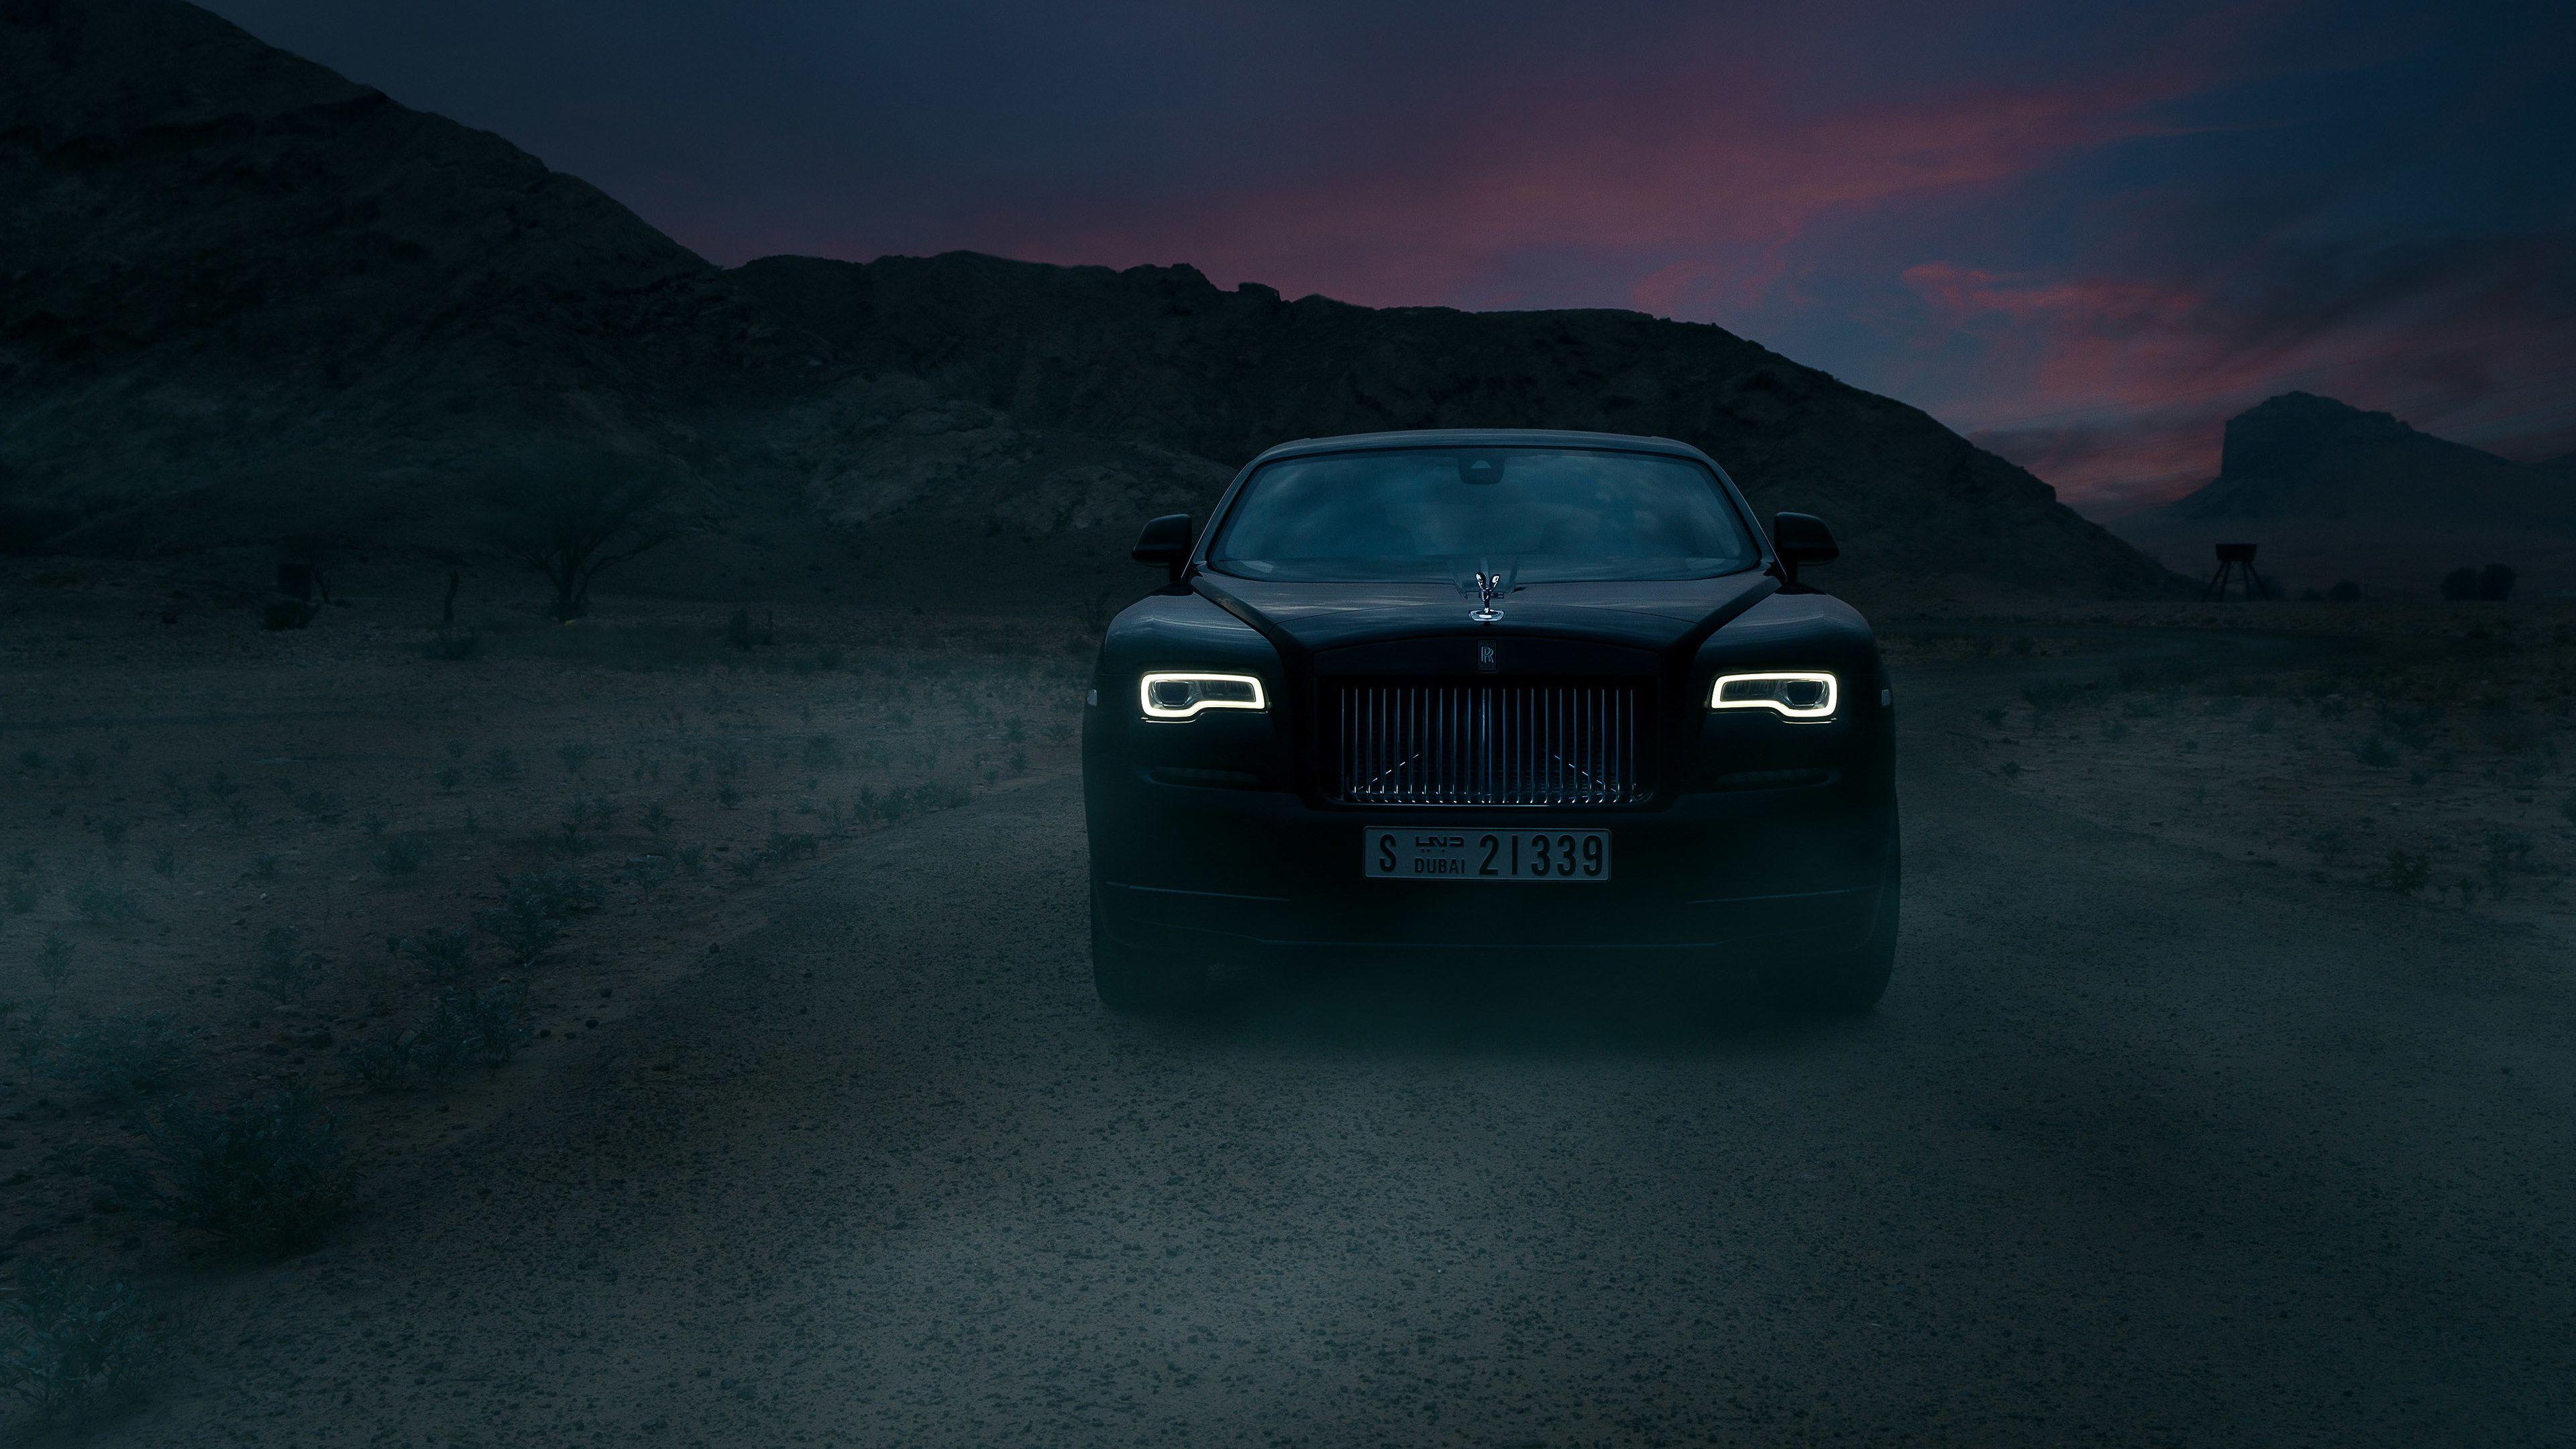 Rolls Royce Wraith Black Badge Rolls Royce Wraith Wallpaper, Rolls Royce Wallpaper, Hd Wallpa. Rolls Royce Wraith Black, Rolls Royce Wraith, Black Car Wallpaper